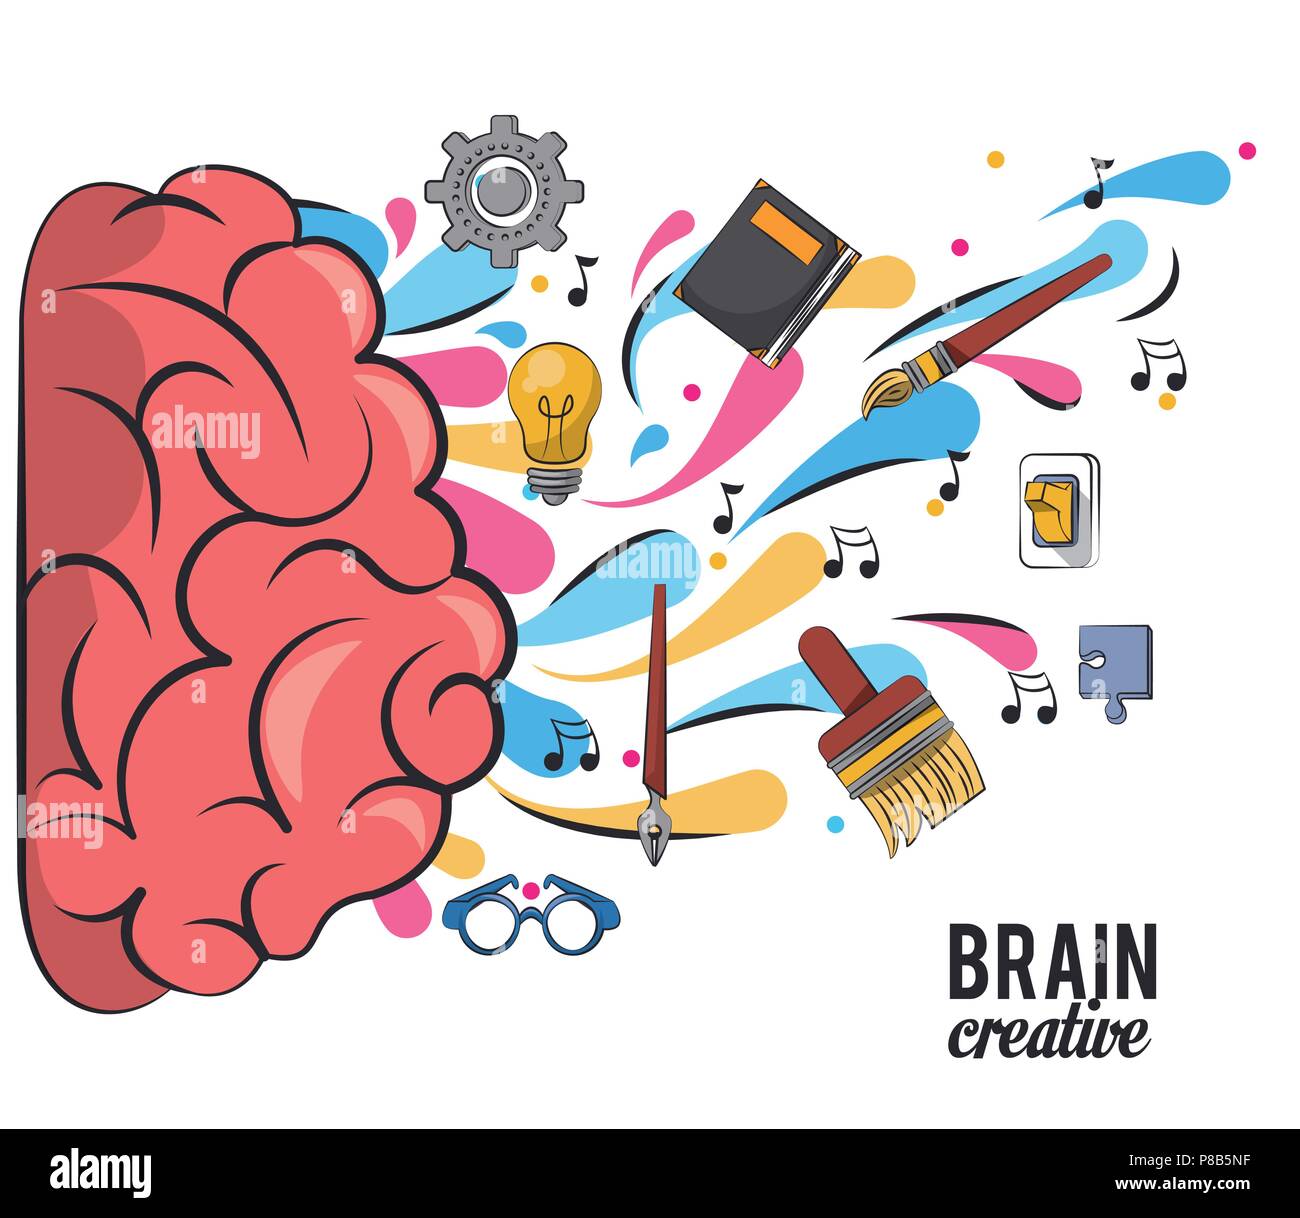 Cerebro creativo dibujos animados Imagen Vector de stock - Alamy